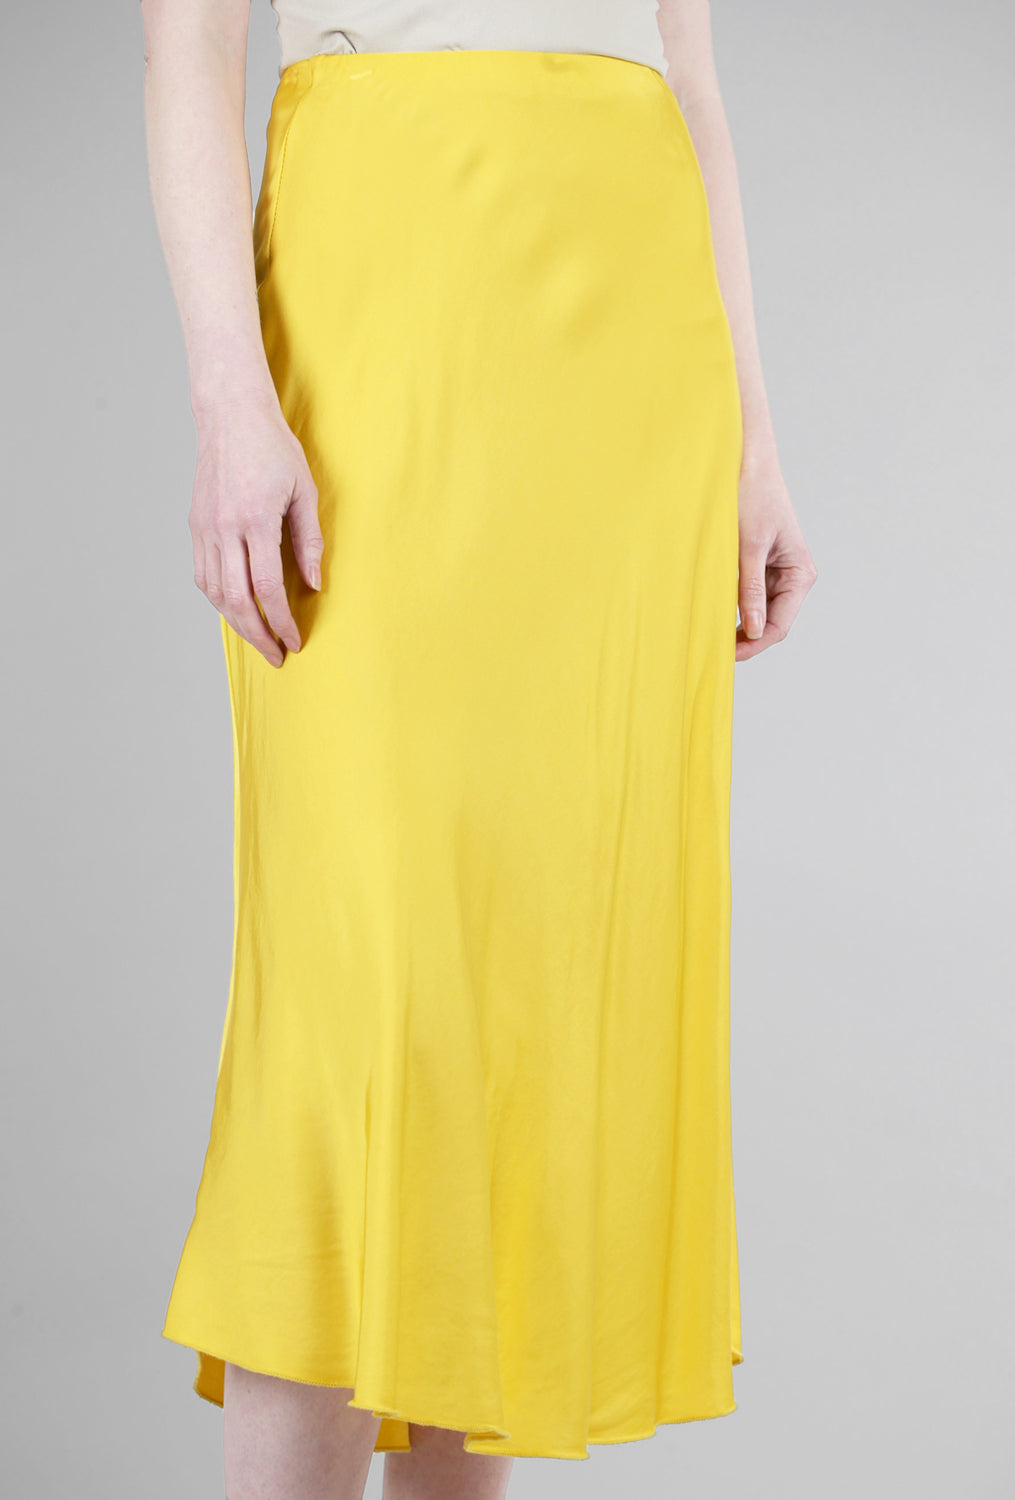 Sightseeing Skirt, Acid Yellow